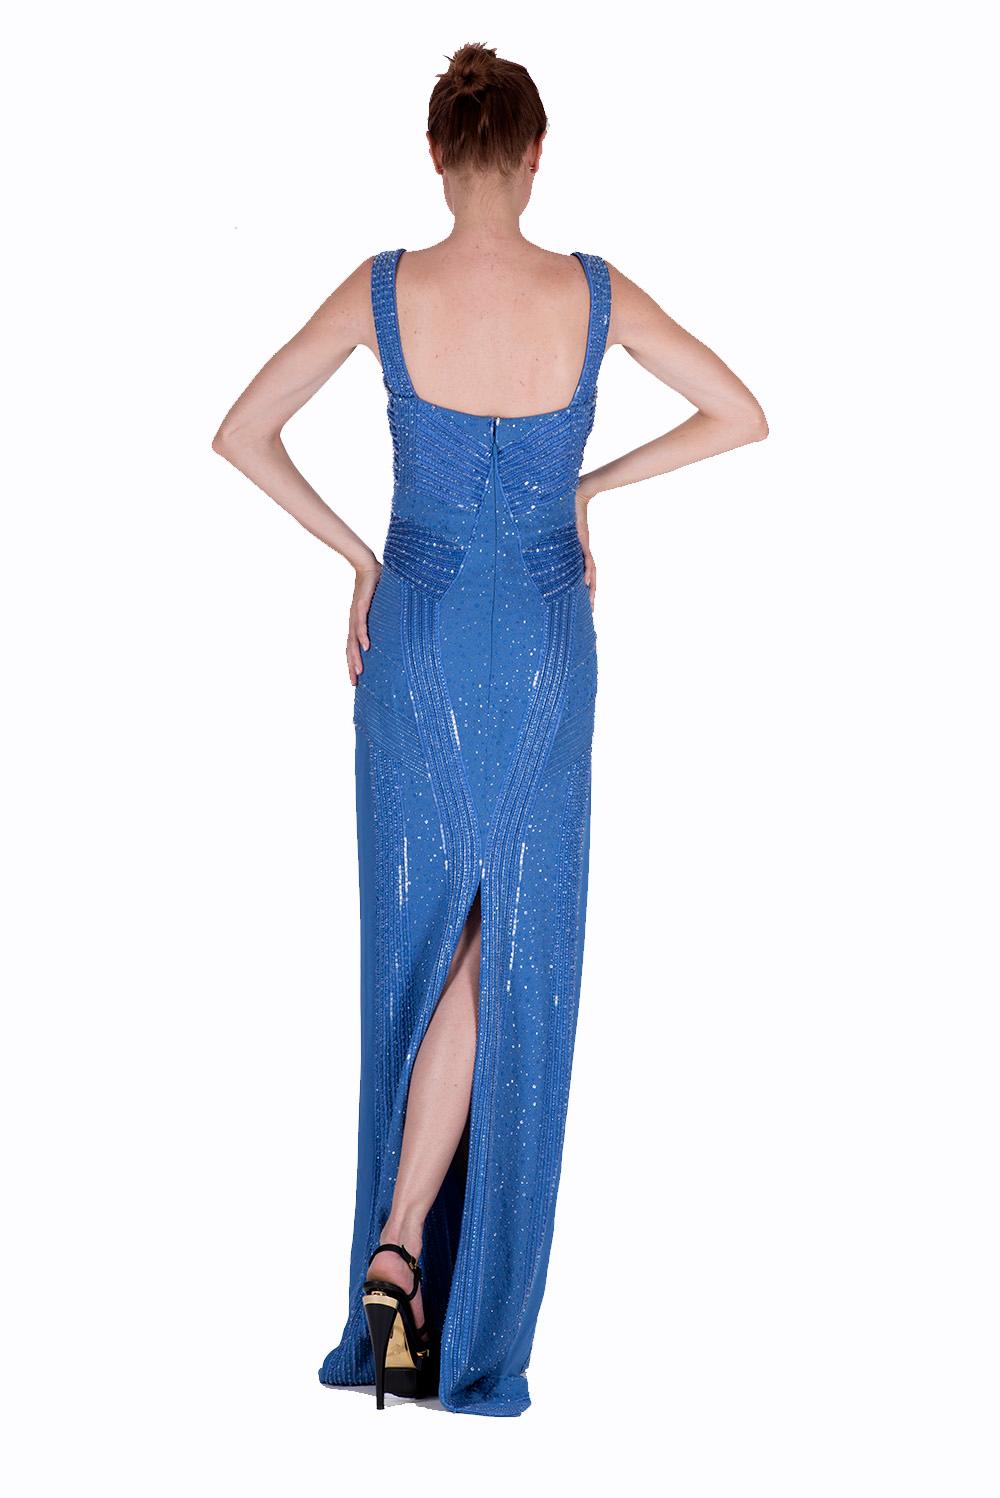 versace blue sparkly dress